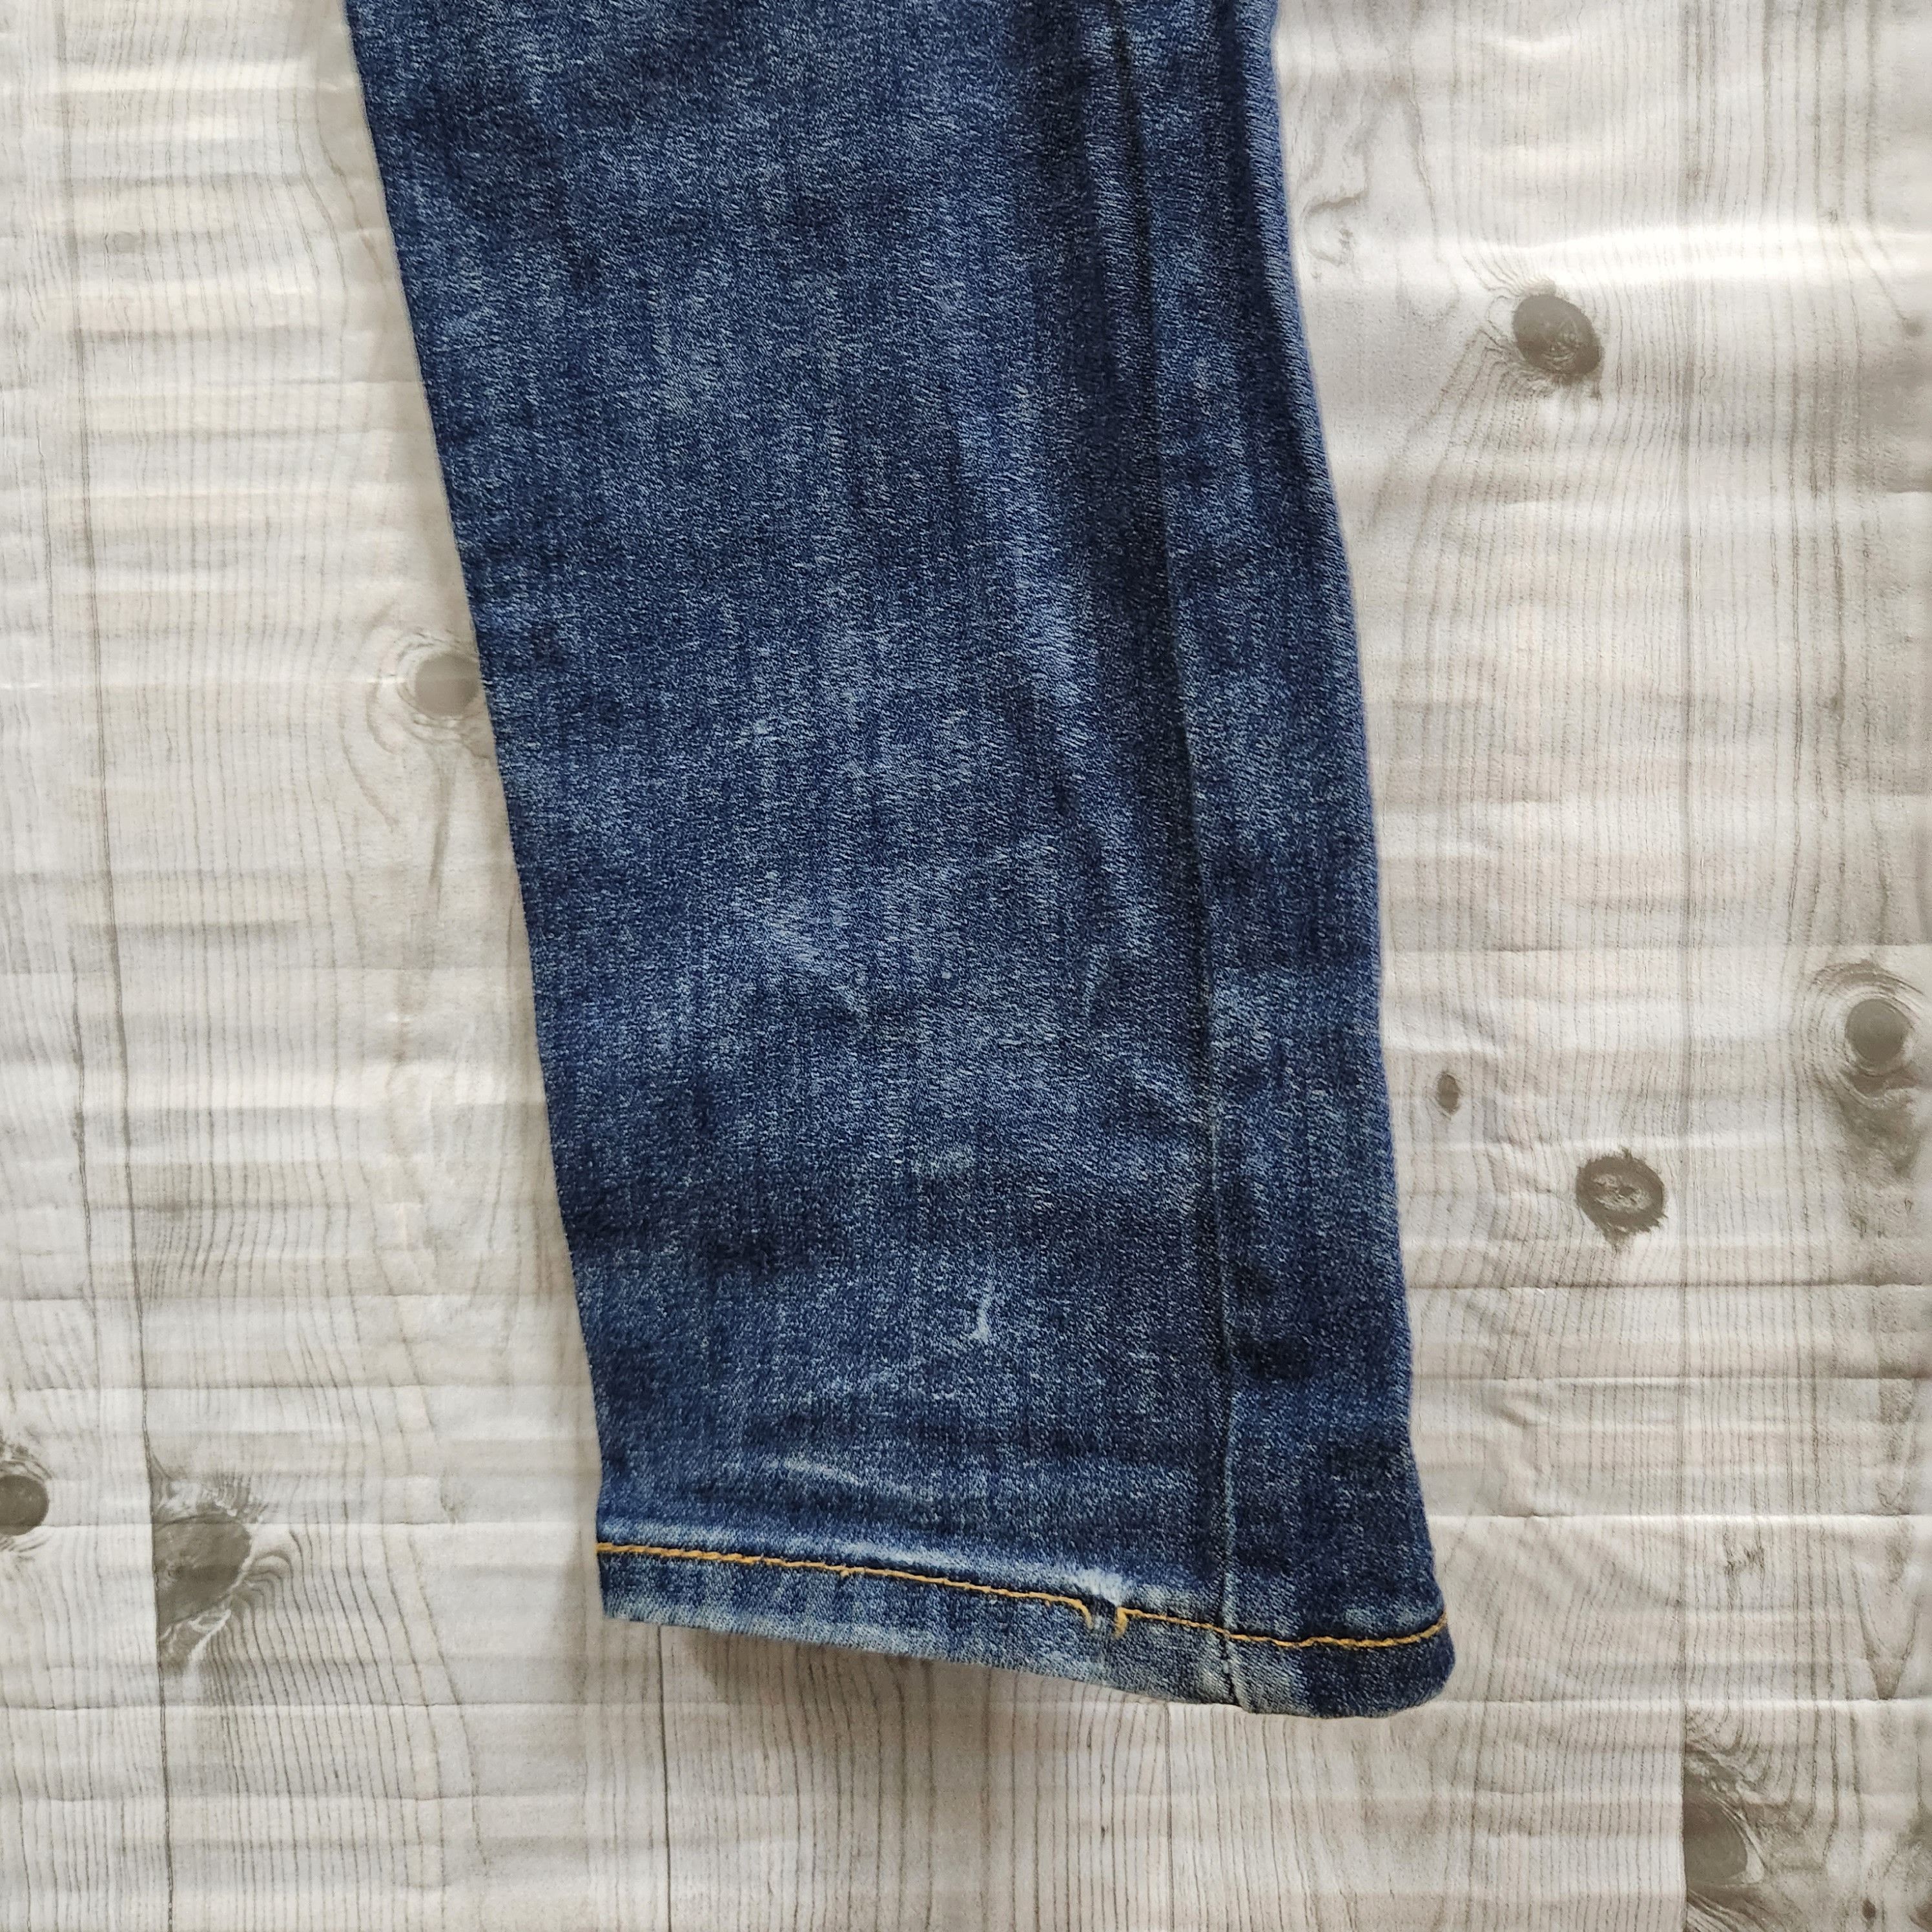 Levi's 510 Blue Denim Jeans - 14